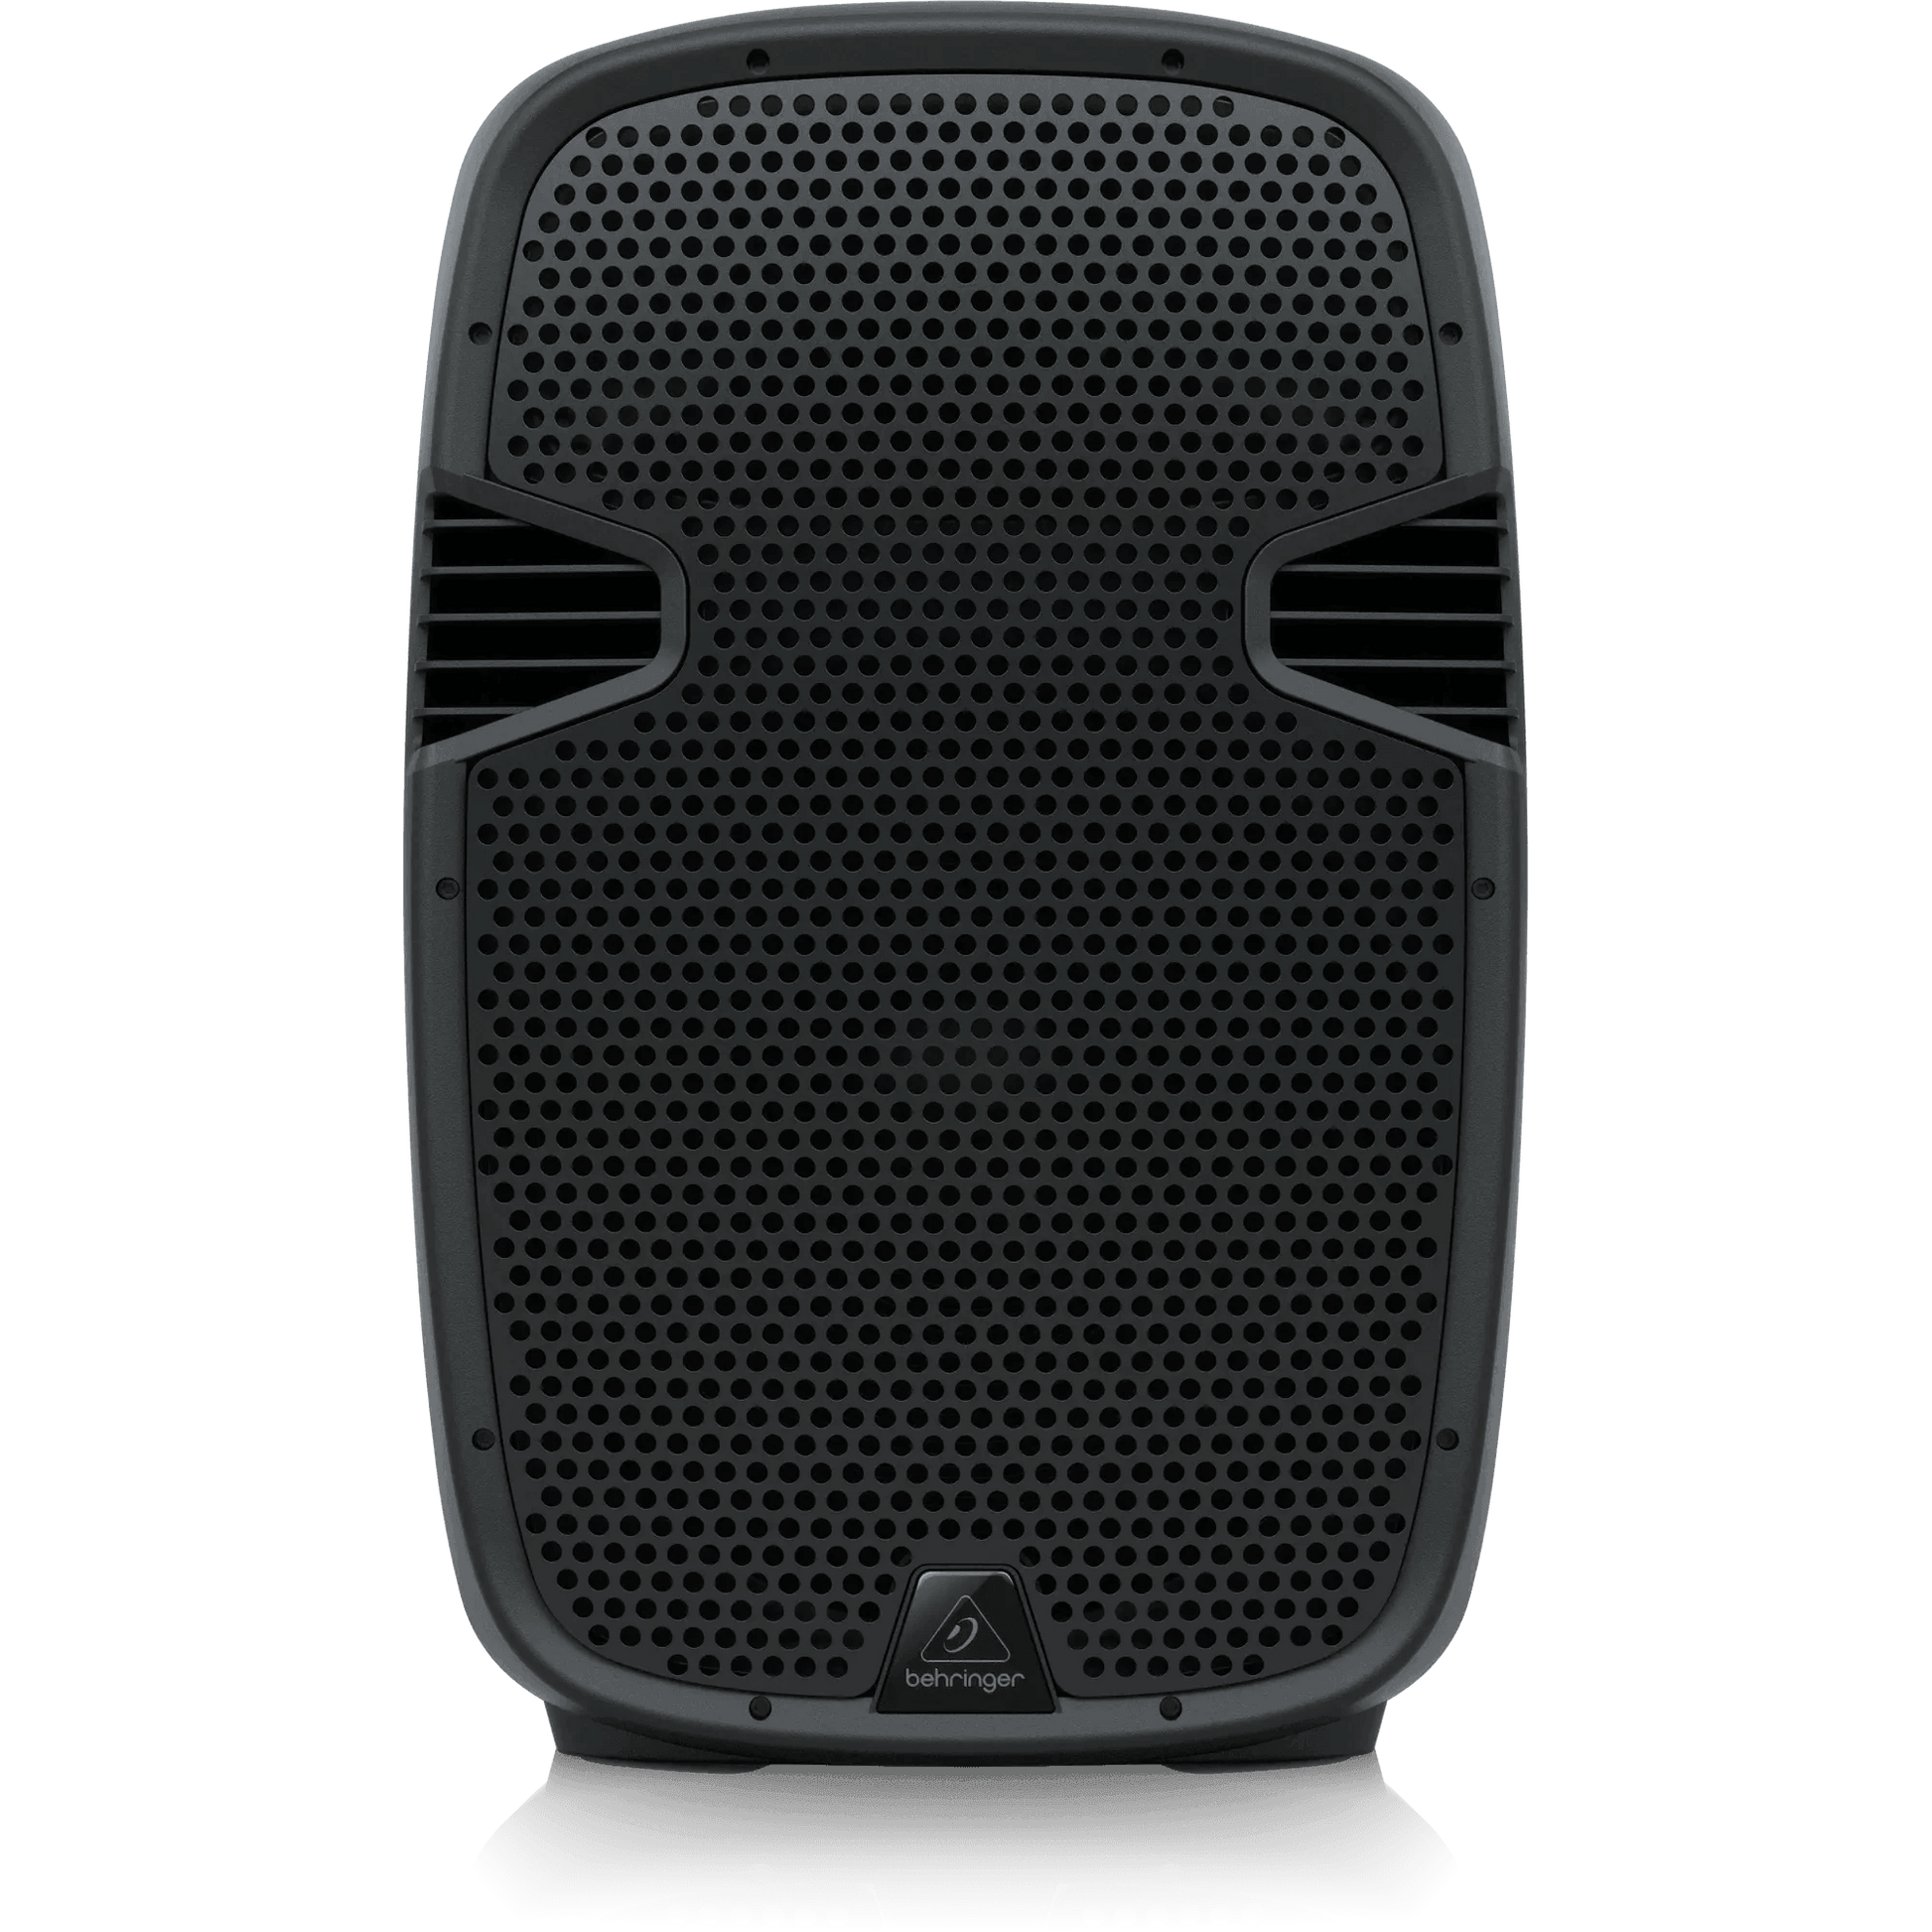 Behringer PK115 800W 15'' Passive PA Speaker with Built-in Multimedia Player